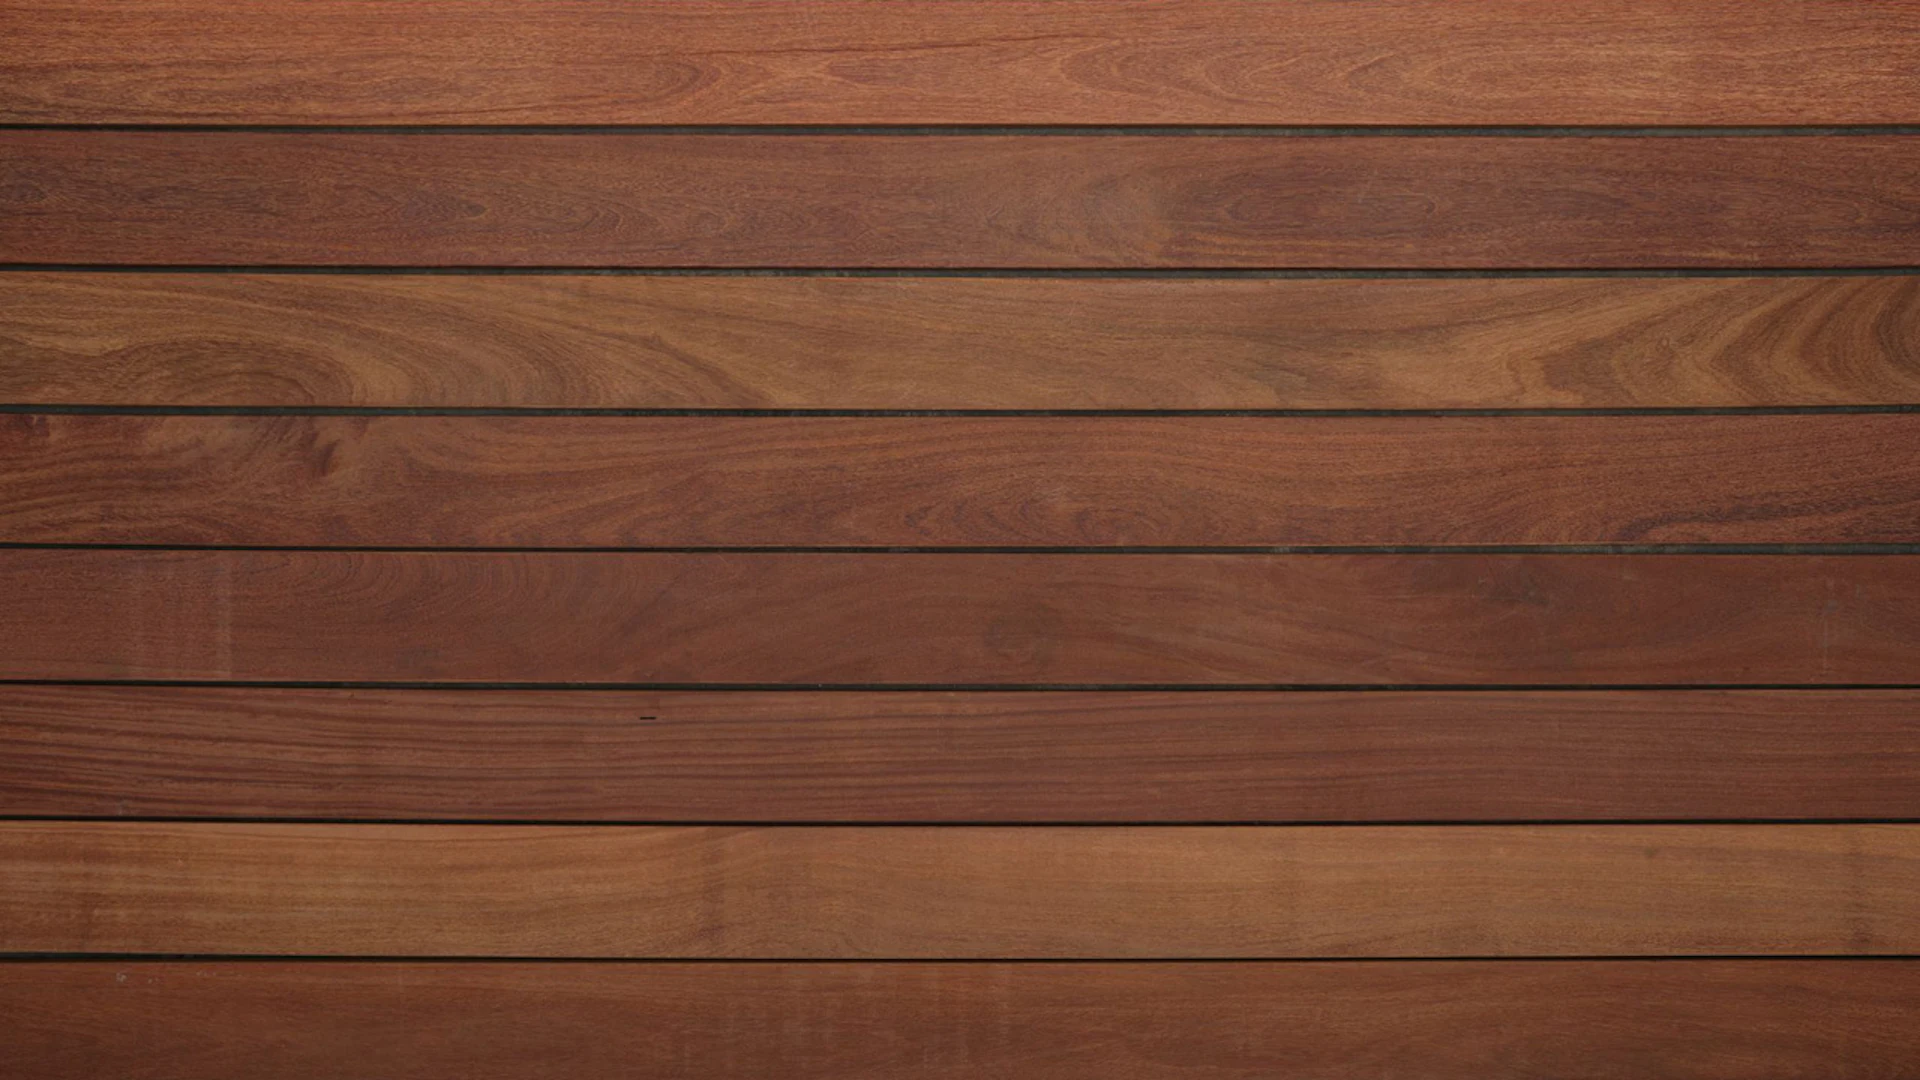 TerraWood Wood Decking Cumaru brown PRIME 21 x 145 x 5790mm - smooth on both sides